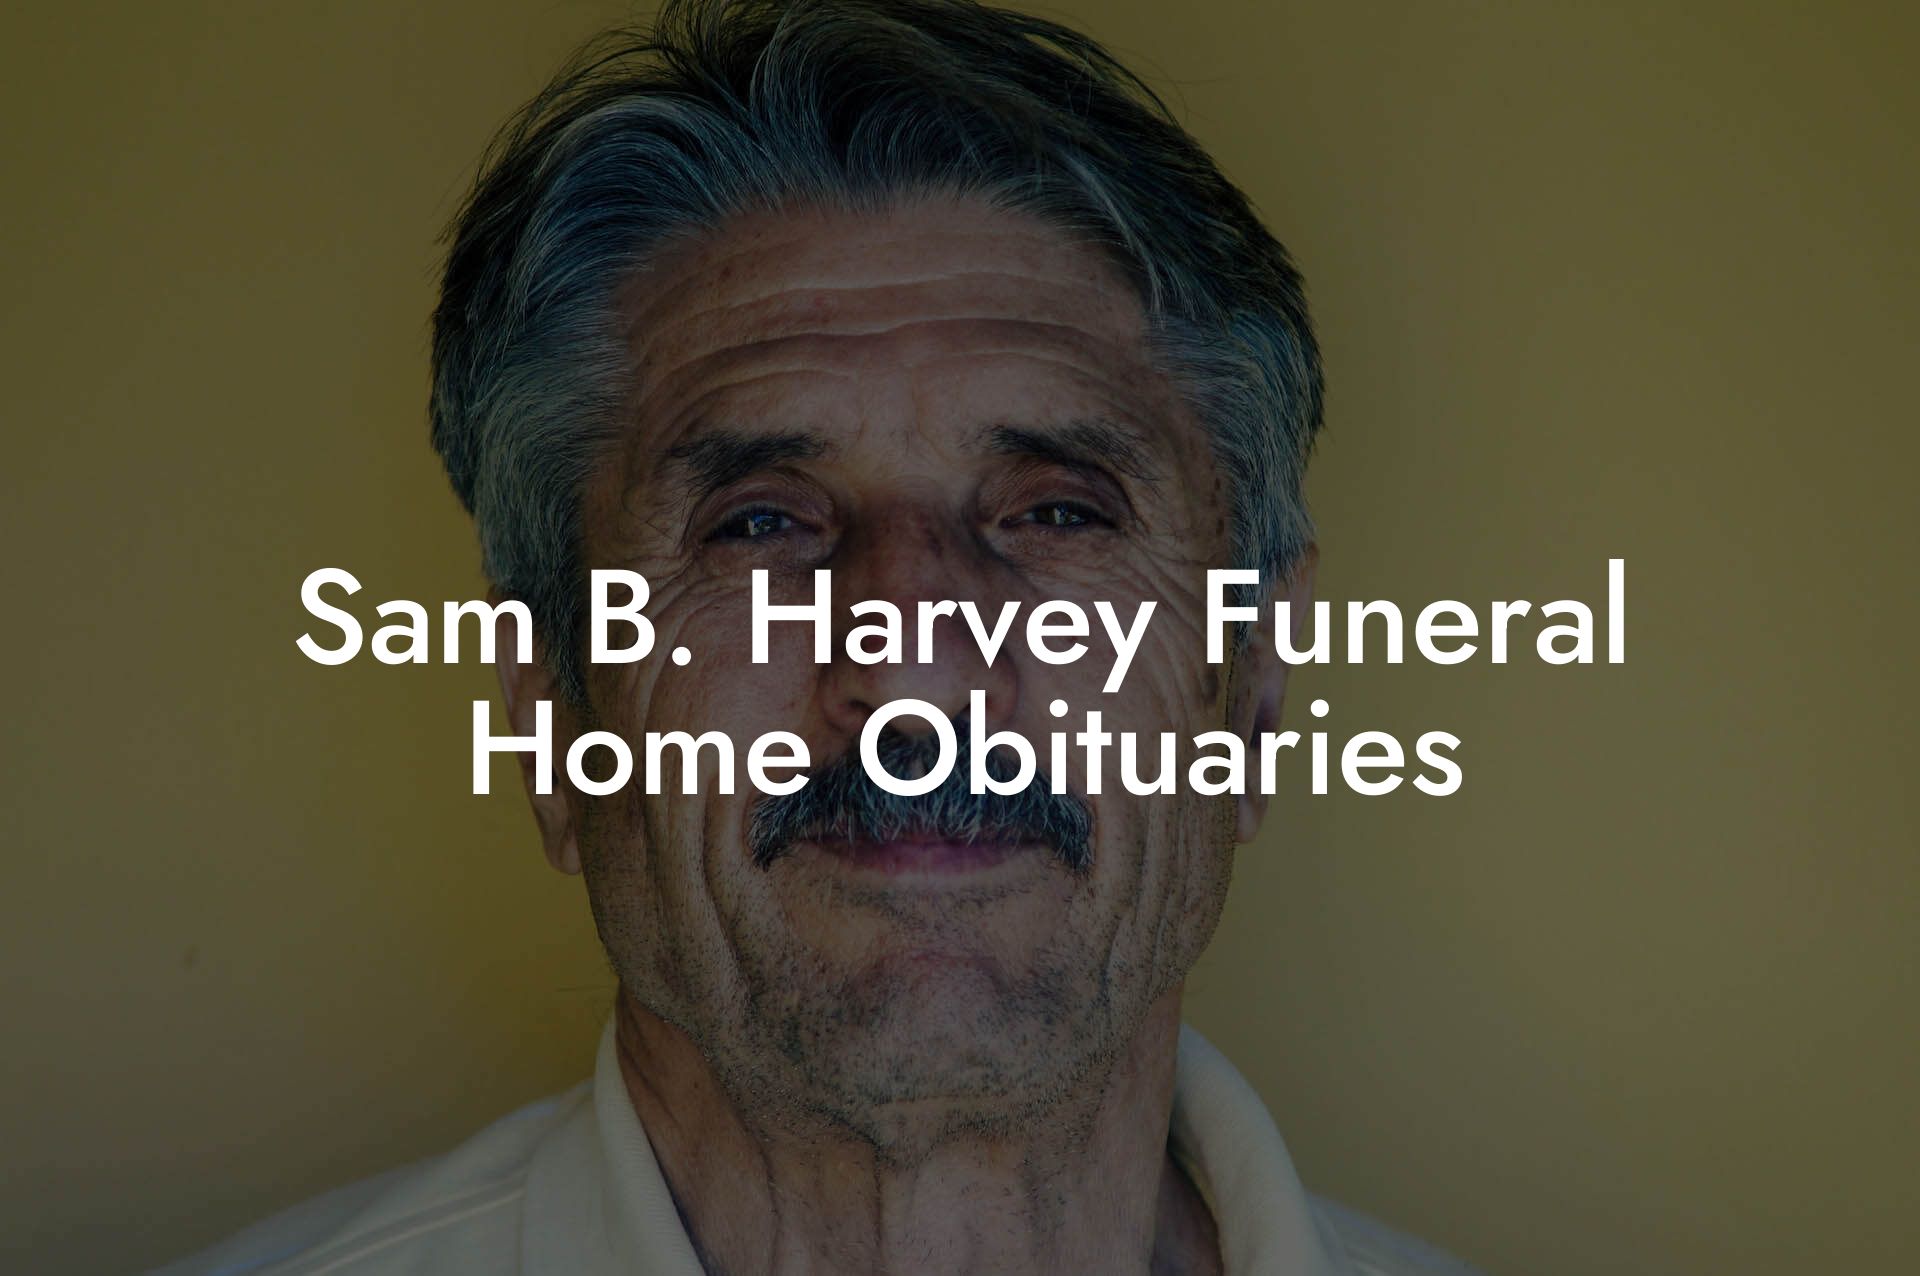 Sam B. Harvey Funeral Home Obituaries